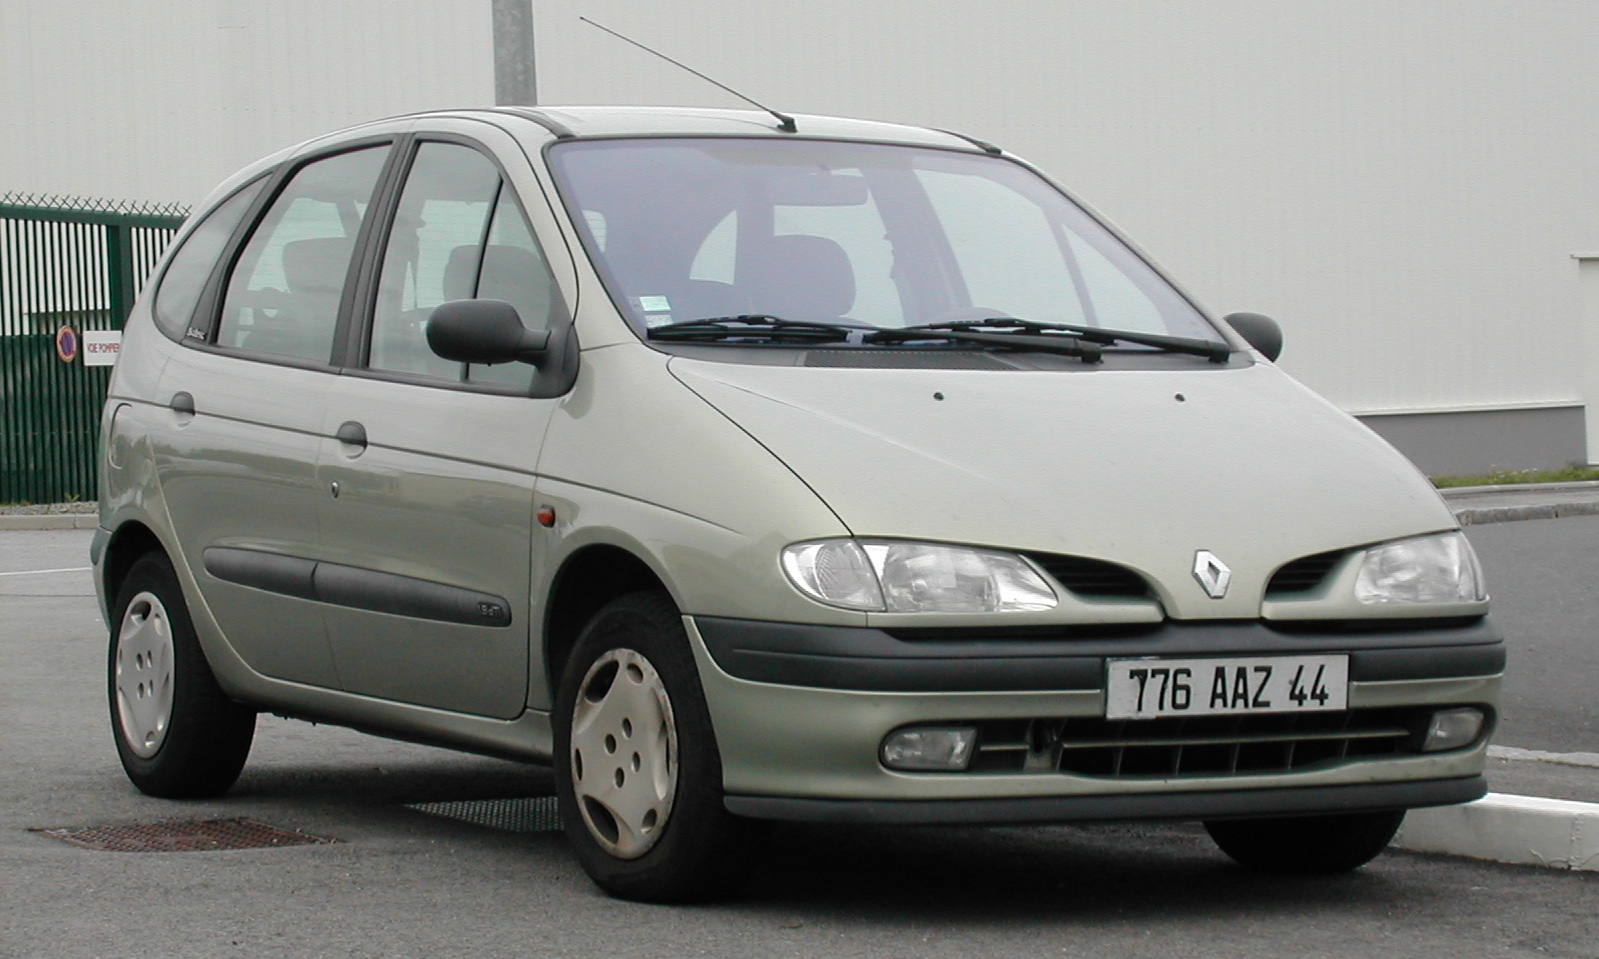 File:Renault Mégane IV chez Roi Merlin (cropped).jpg - Wikipedia